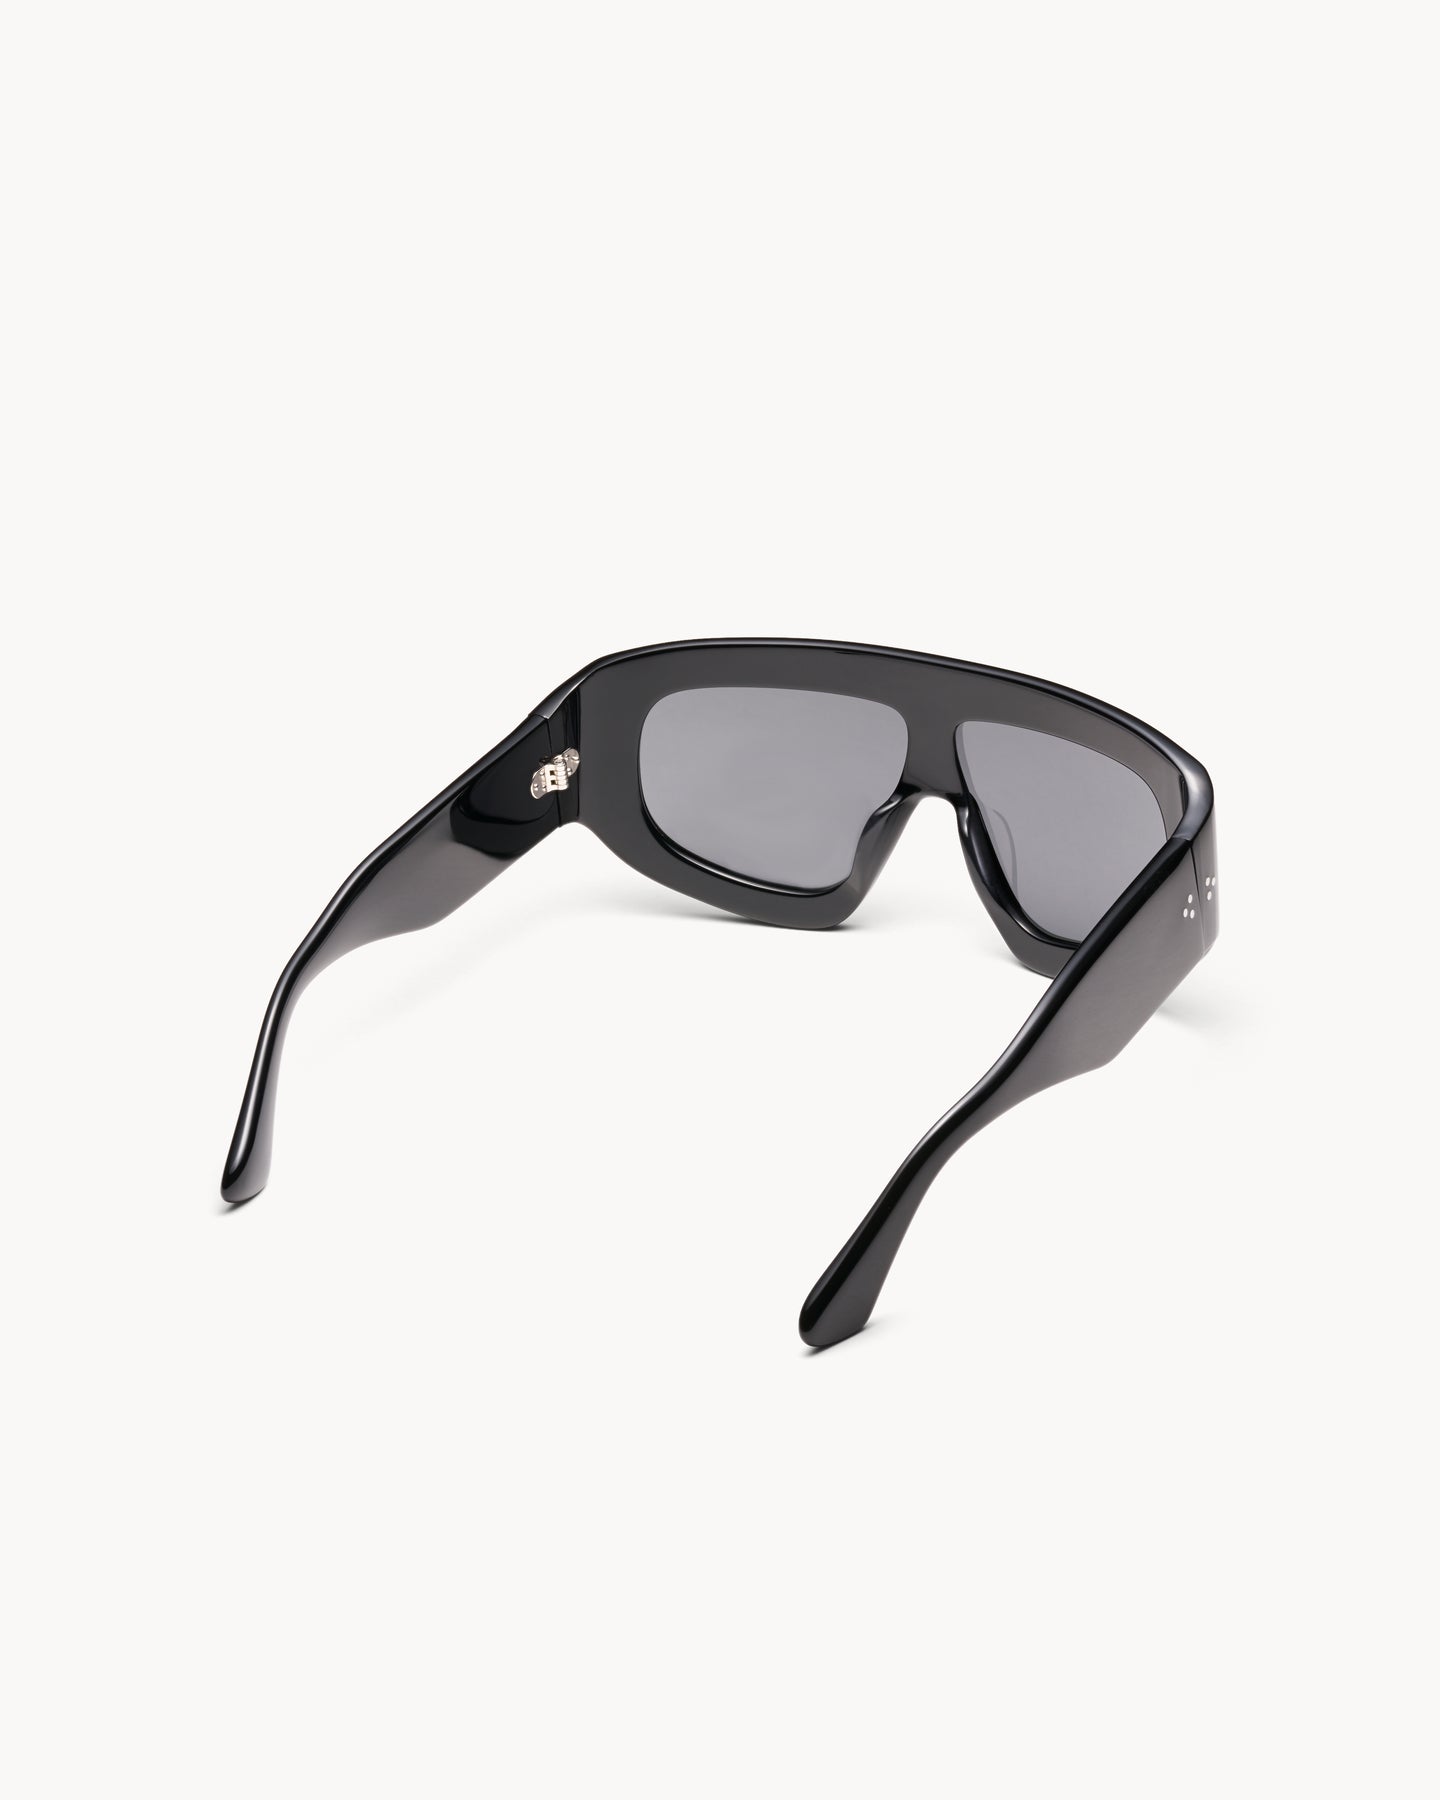 Port Tanger Saraa Sunglasses in Black Acetate and Black Lenses 3